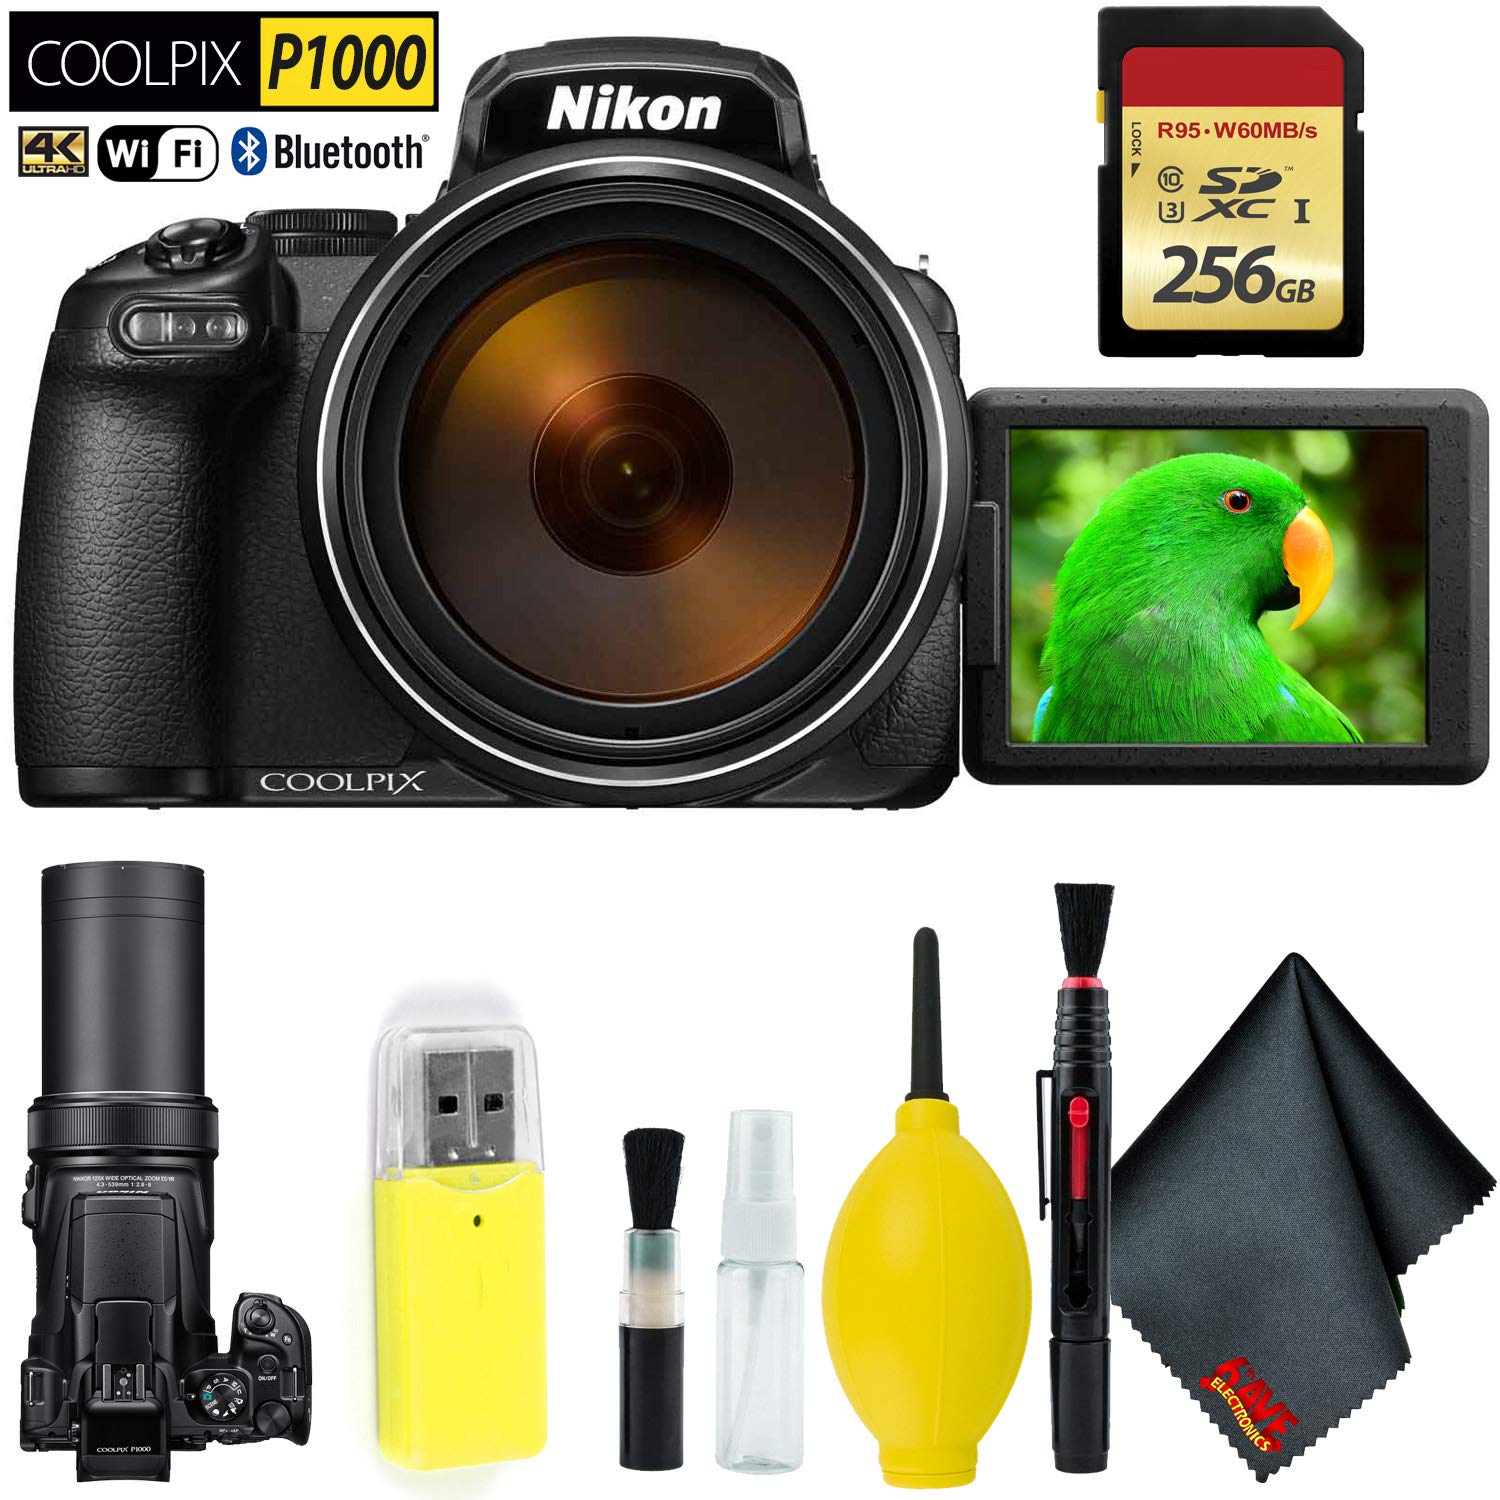 Nikon COOLPIX P1000 Digital Camera + 256GB Memory Card Base Bundle International Model